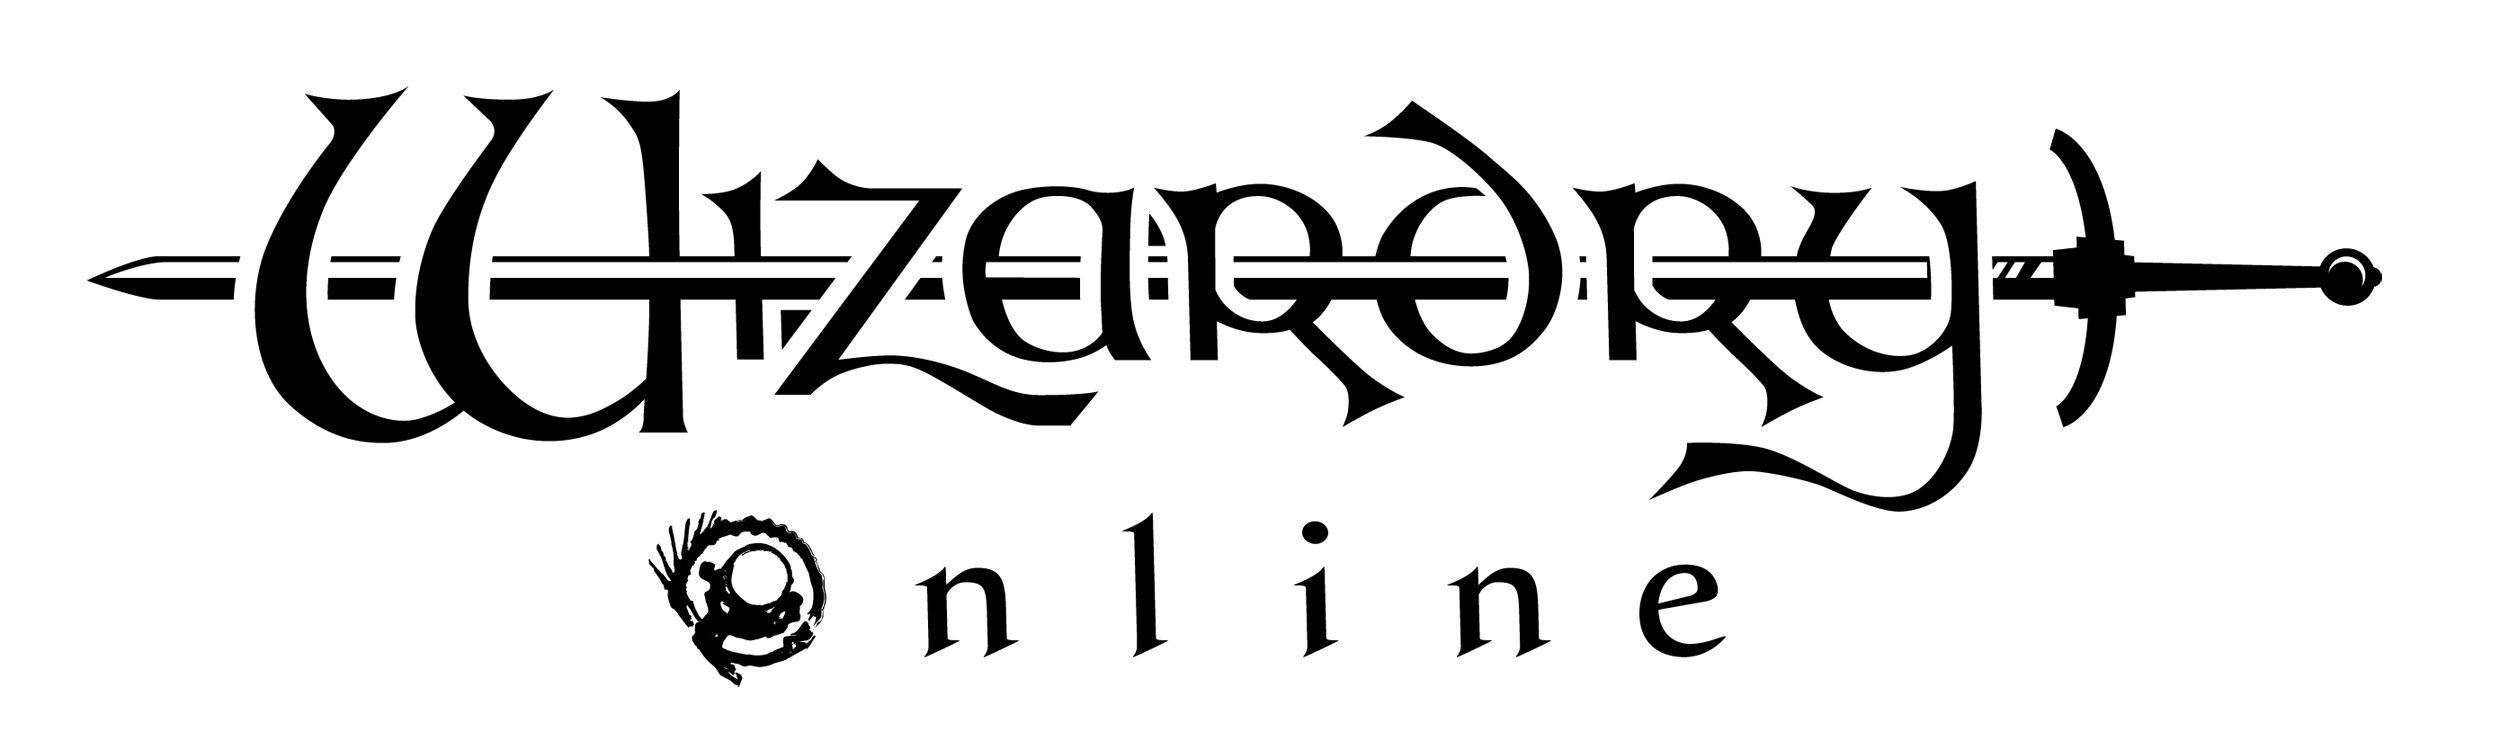 Wizardry Logo - RPGFan Pictures - Wizardry Online - Artwork